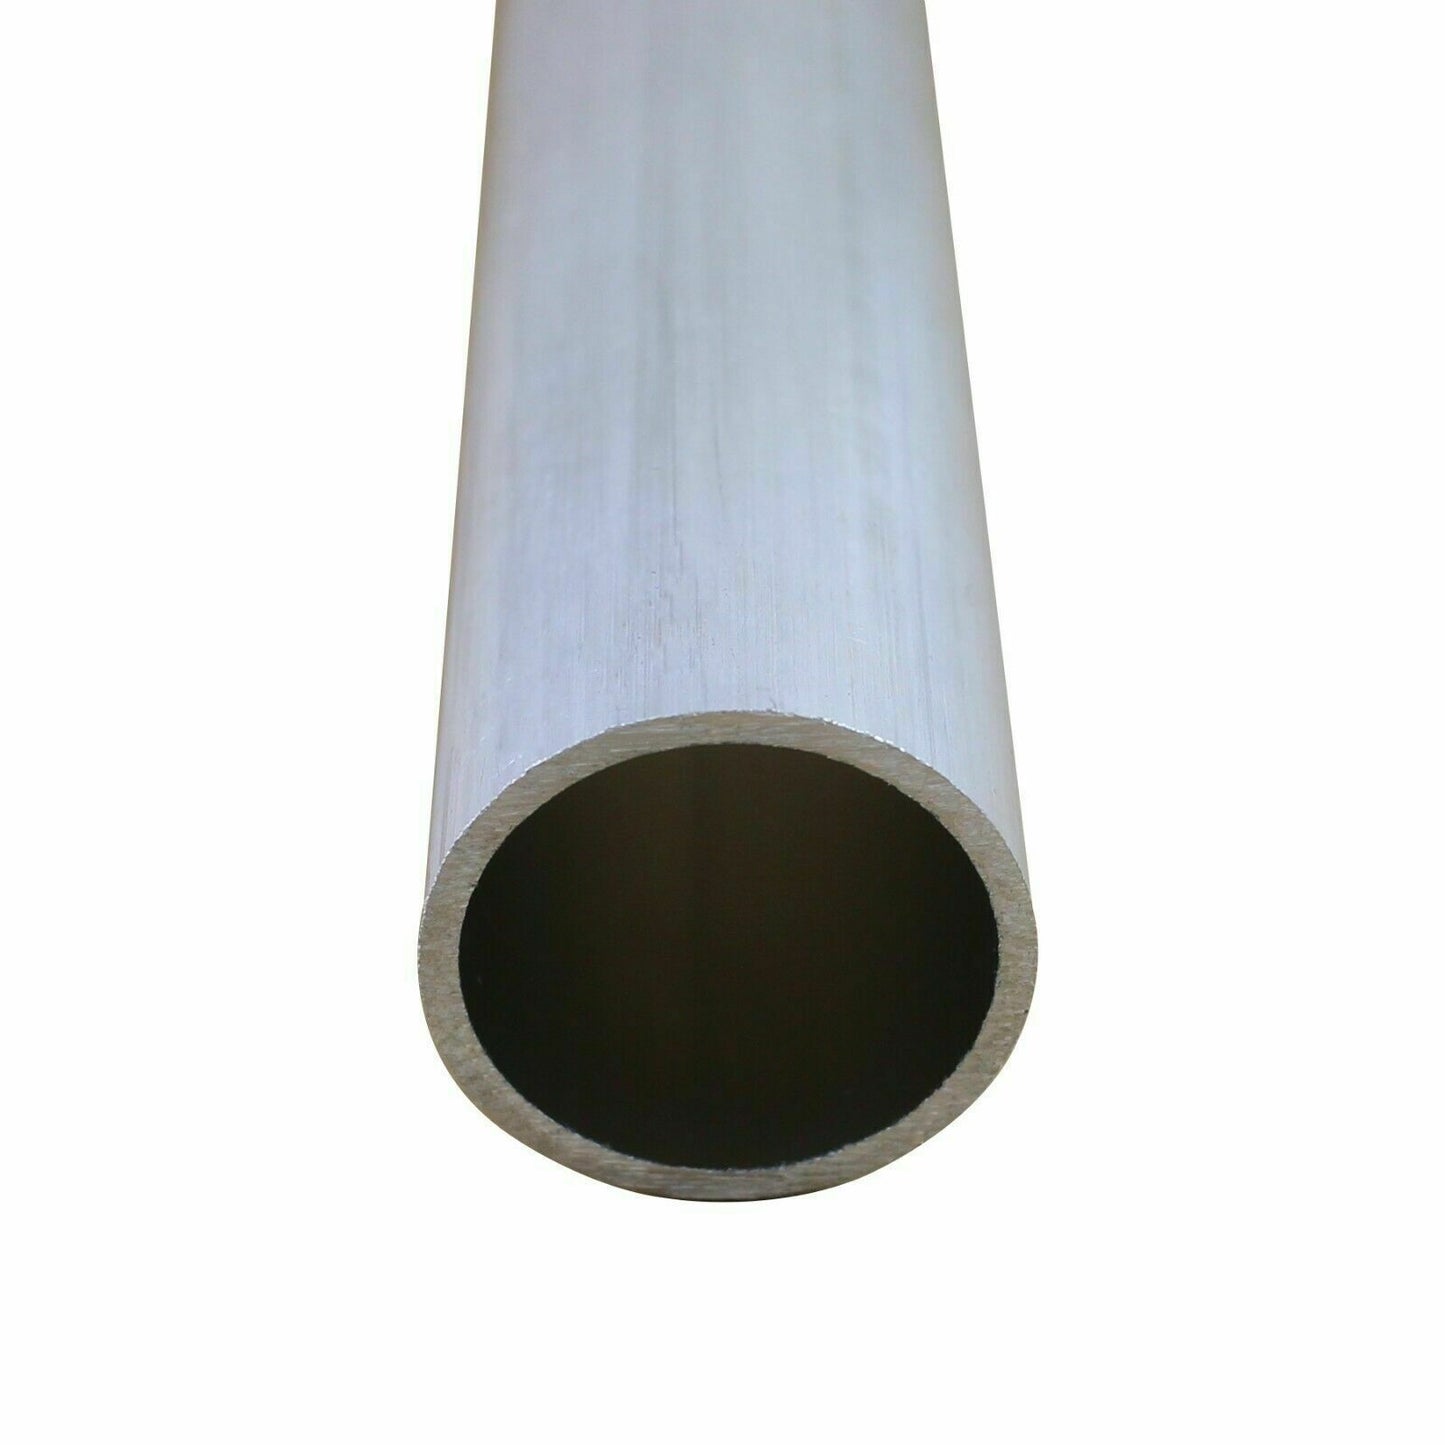 OD 36 mm ID 30 mm 1 pièce Tube rond en aluminium